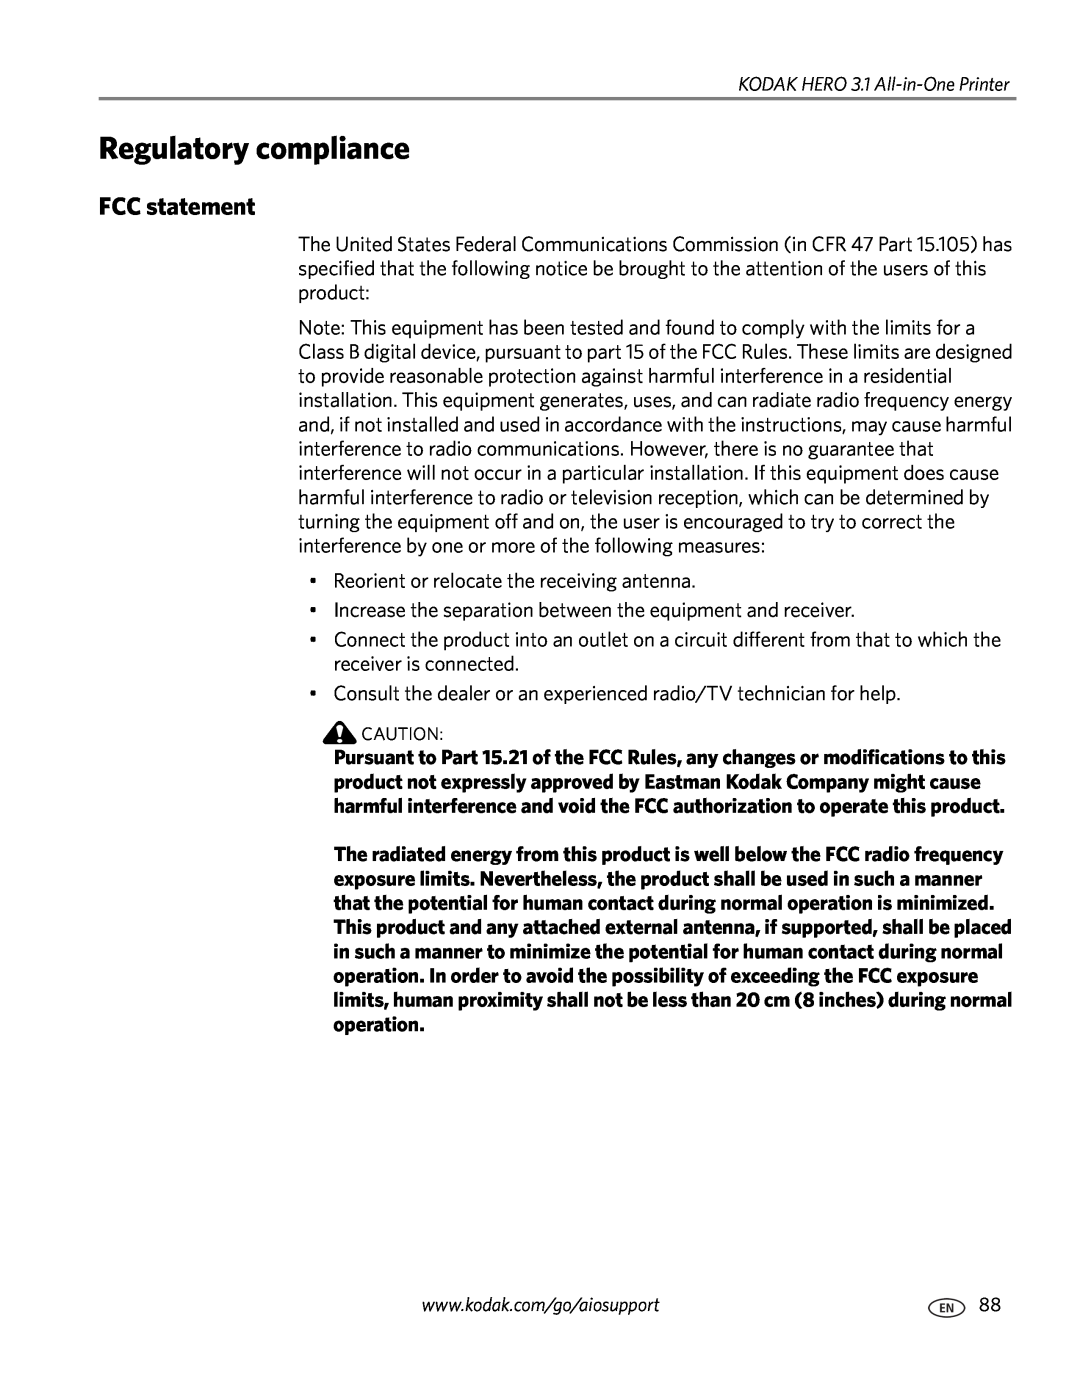 Kodak 3.1 manual Regulatory compliance, FCC statement 